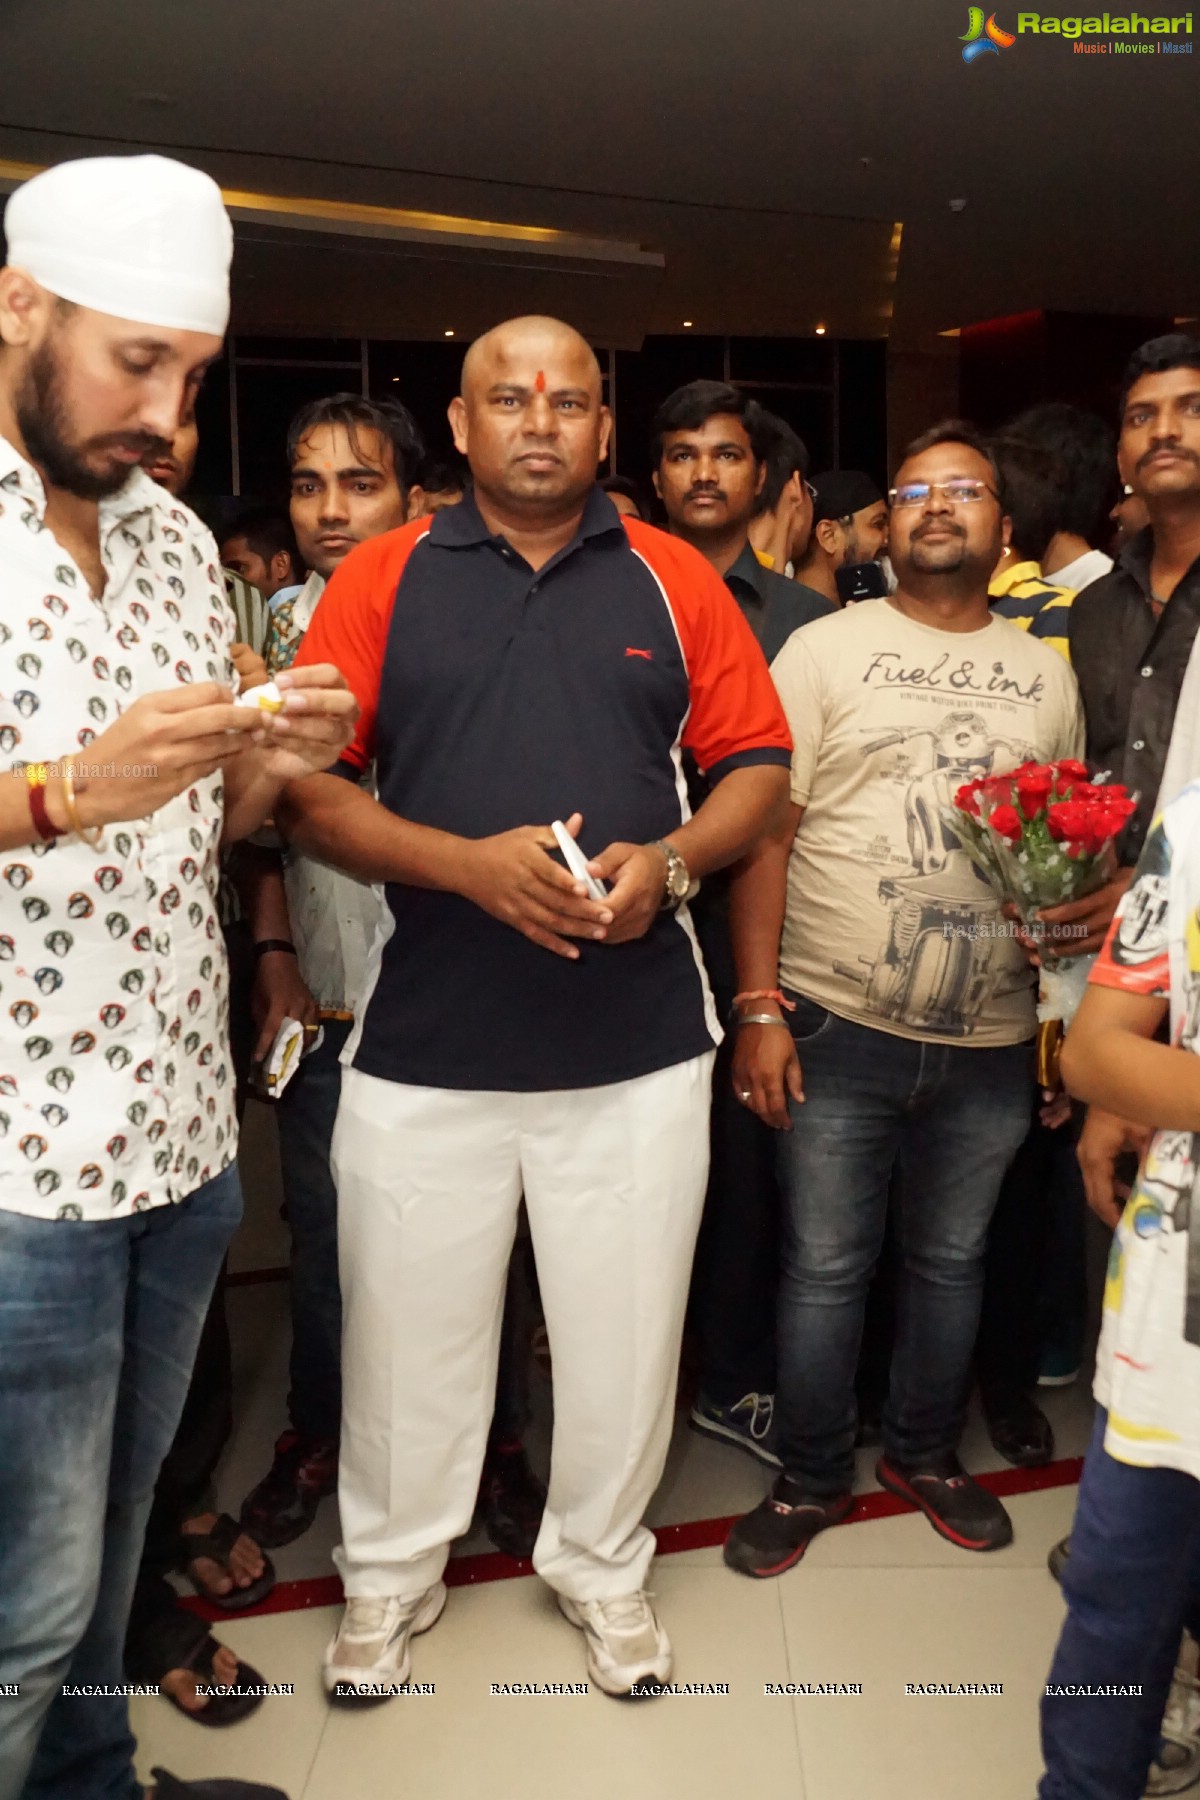 Bajrangi Bhaijaan Special Screening at PVR Cinemas by Being Human Ek Umeed NGO, Hyderabad